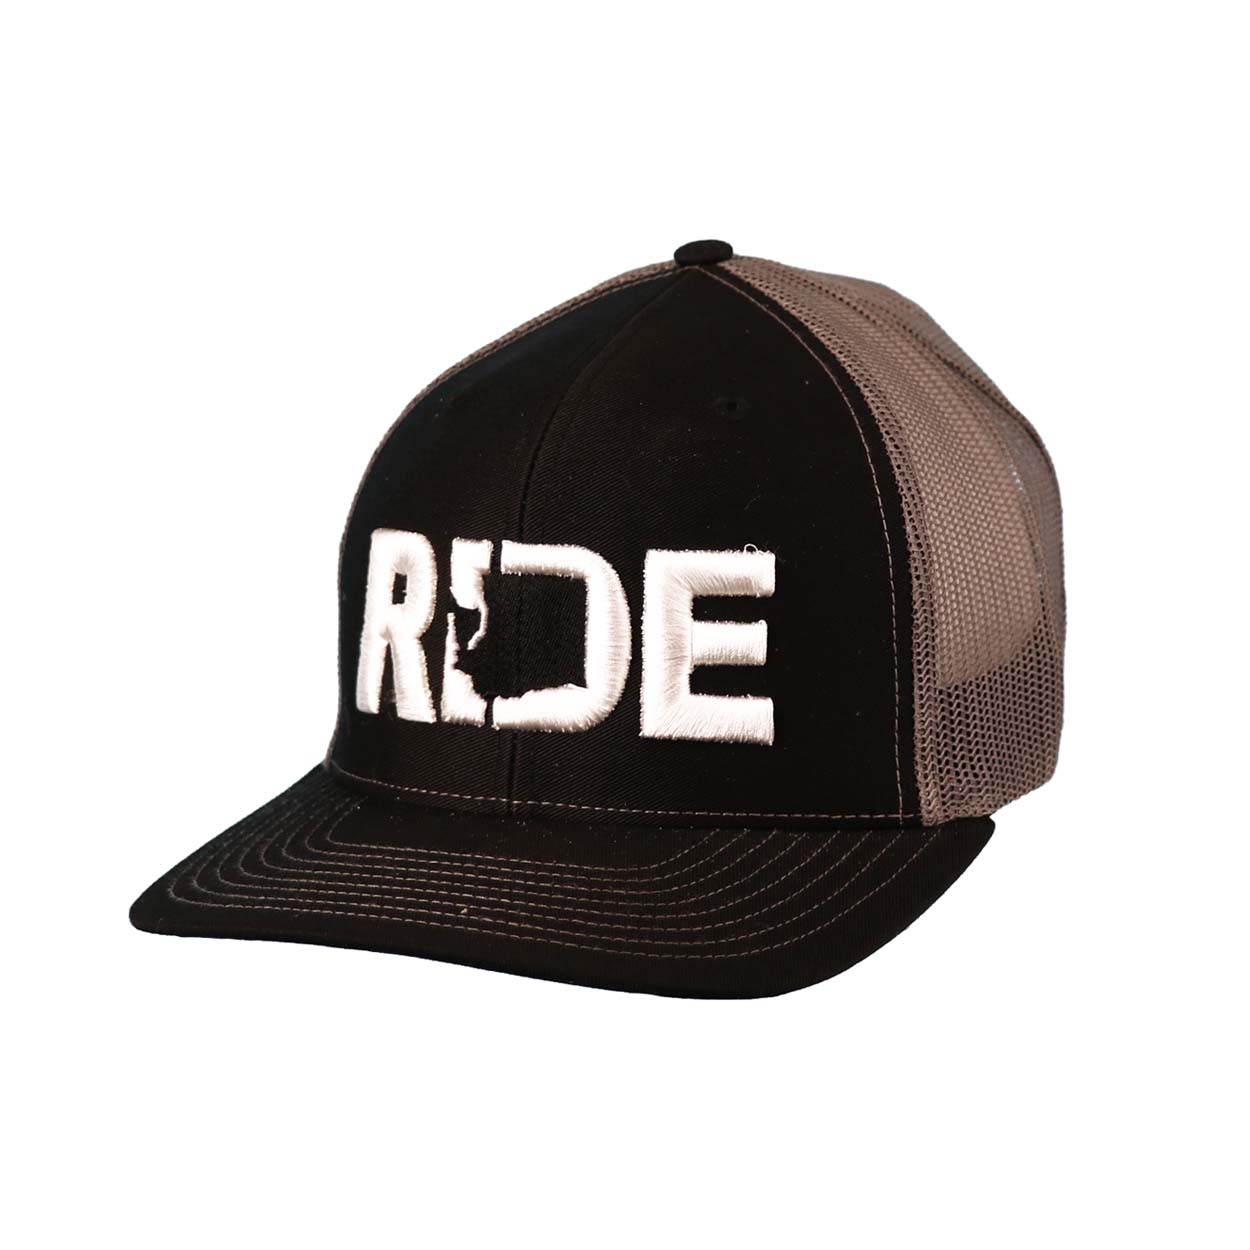 Ride Washington Classic Embroidered Snapback Trucker Hat Black/Gray